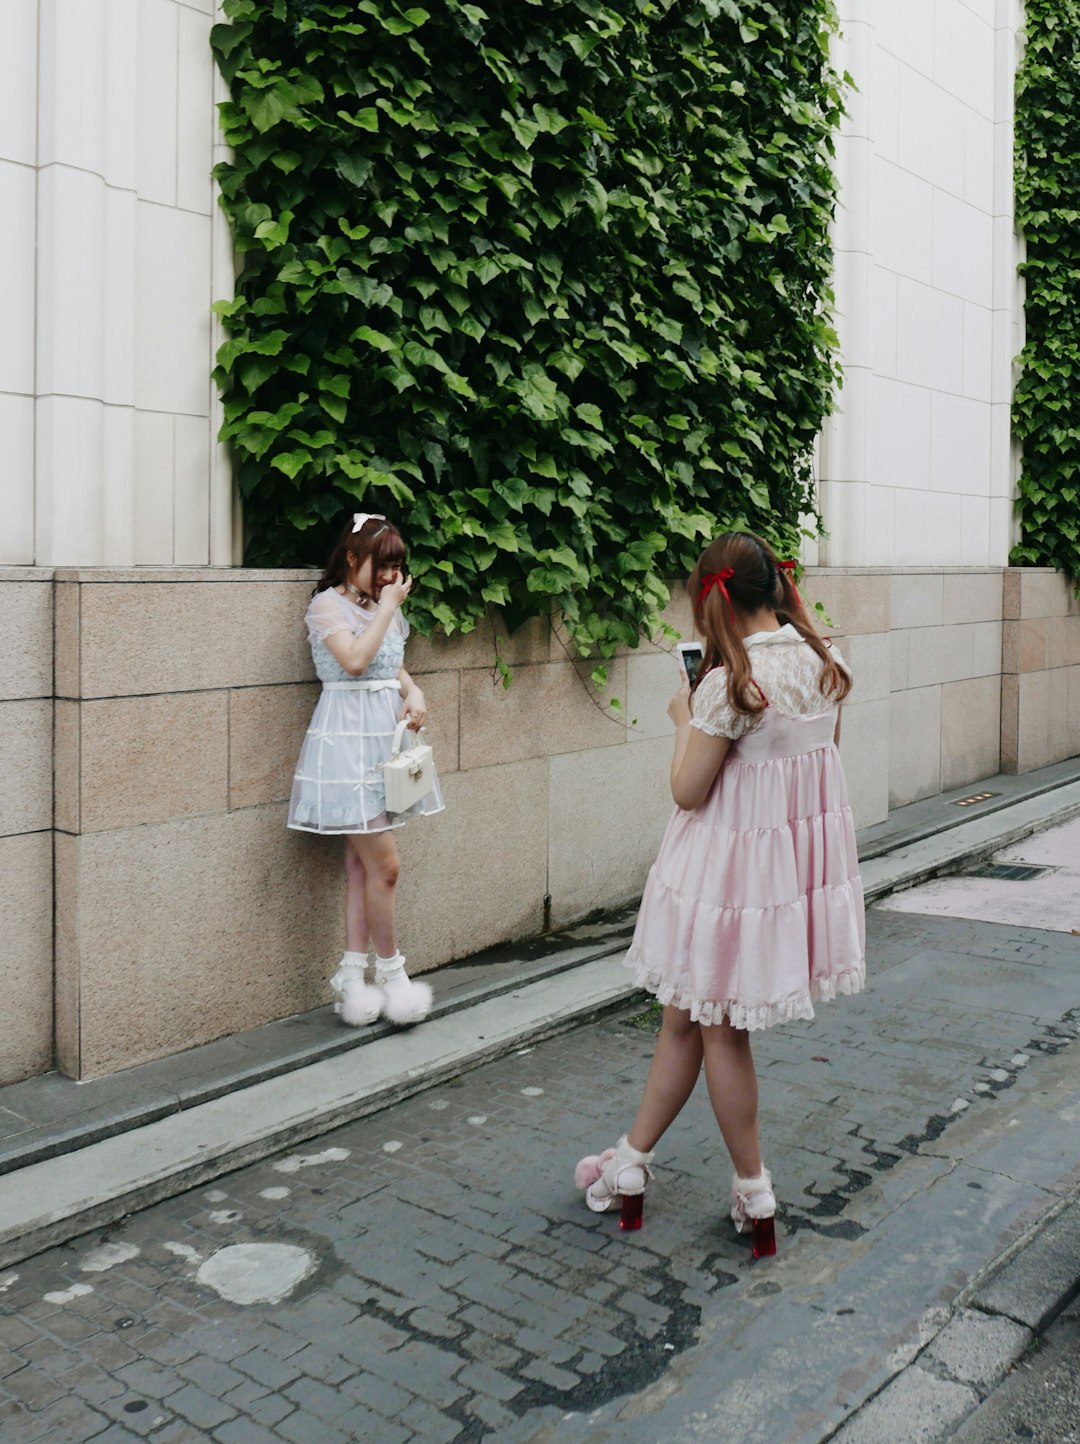 2 girls standing on sidewalk during daytime